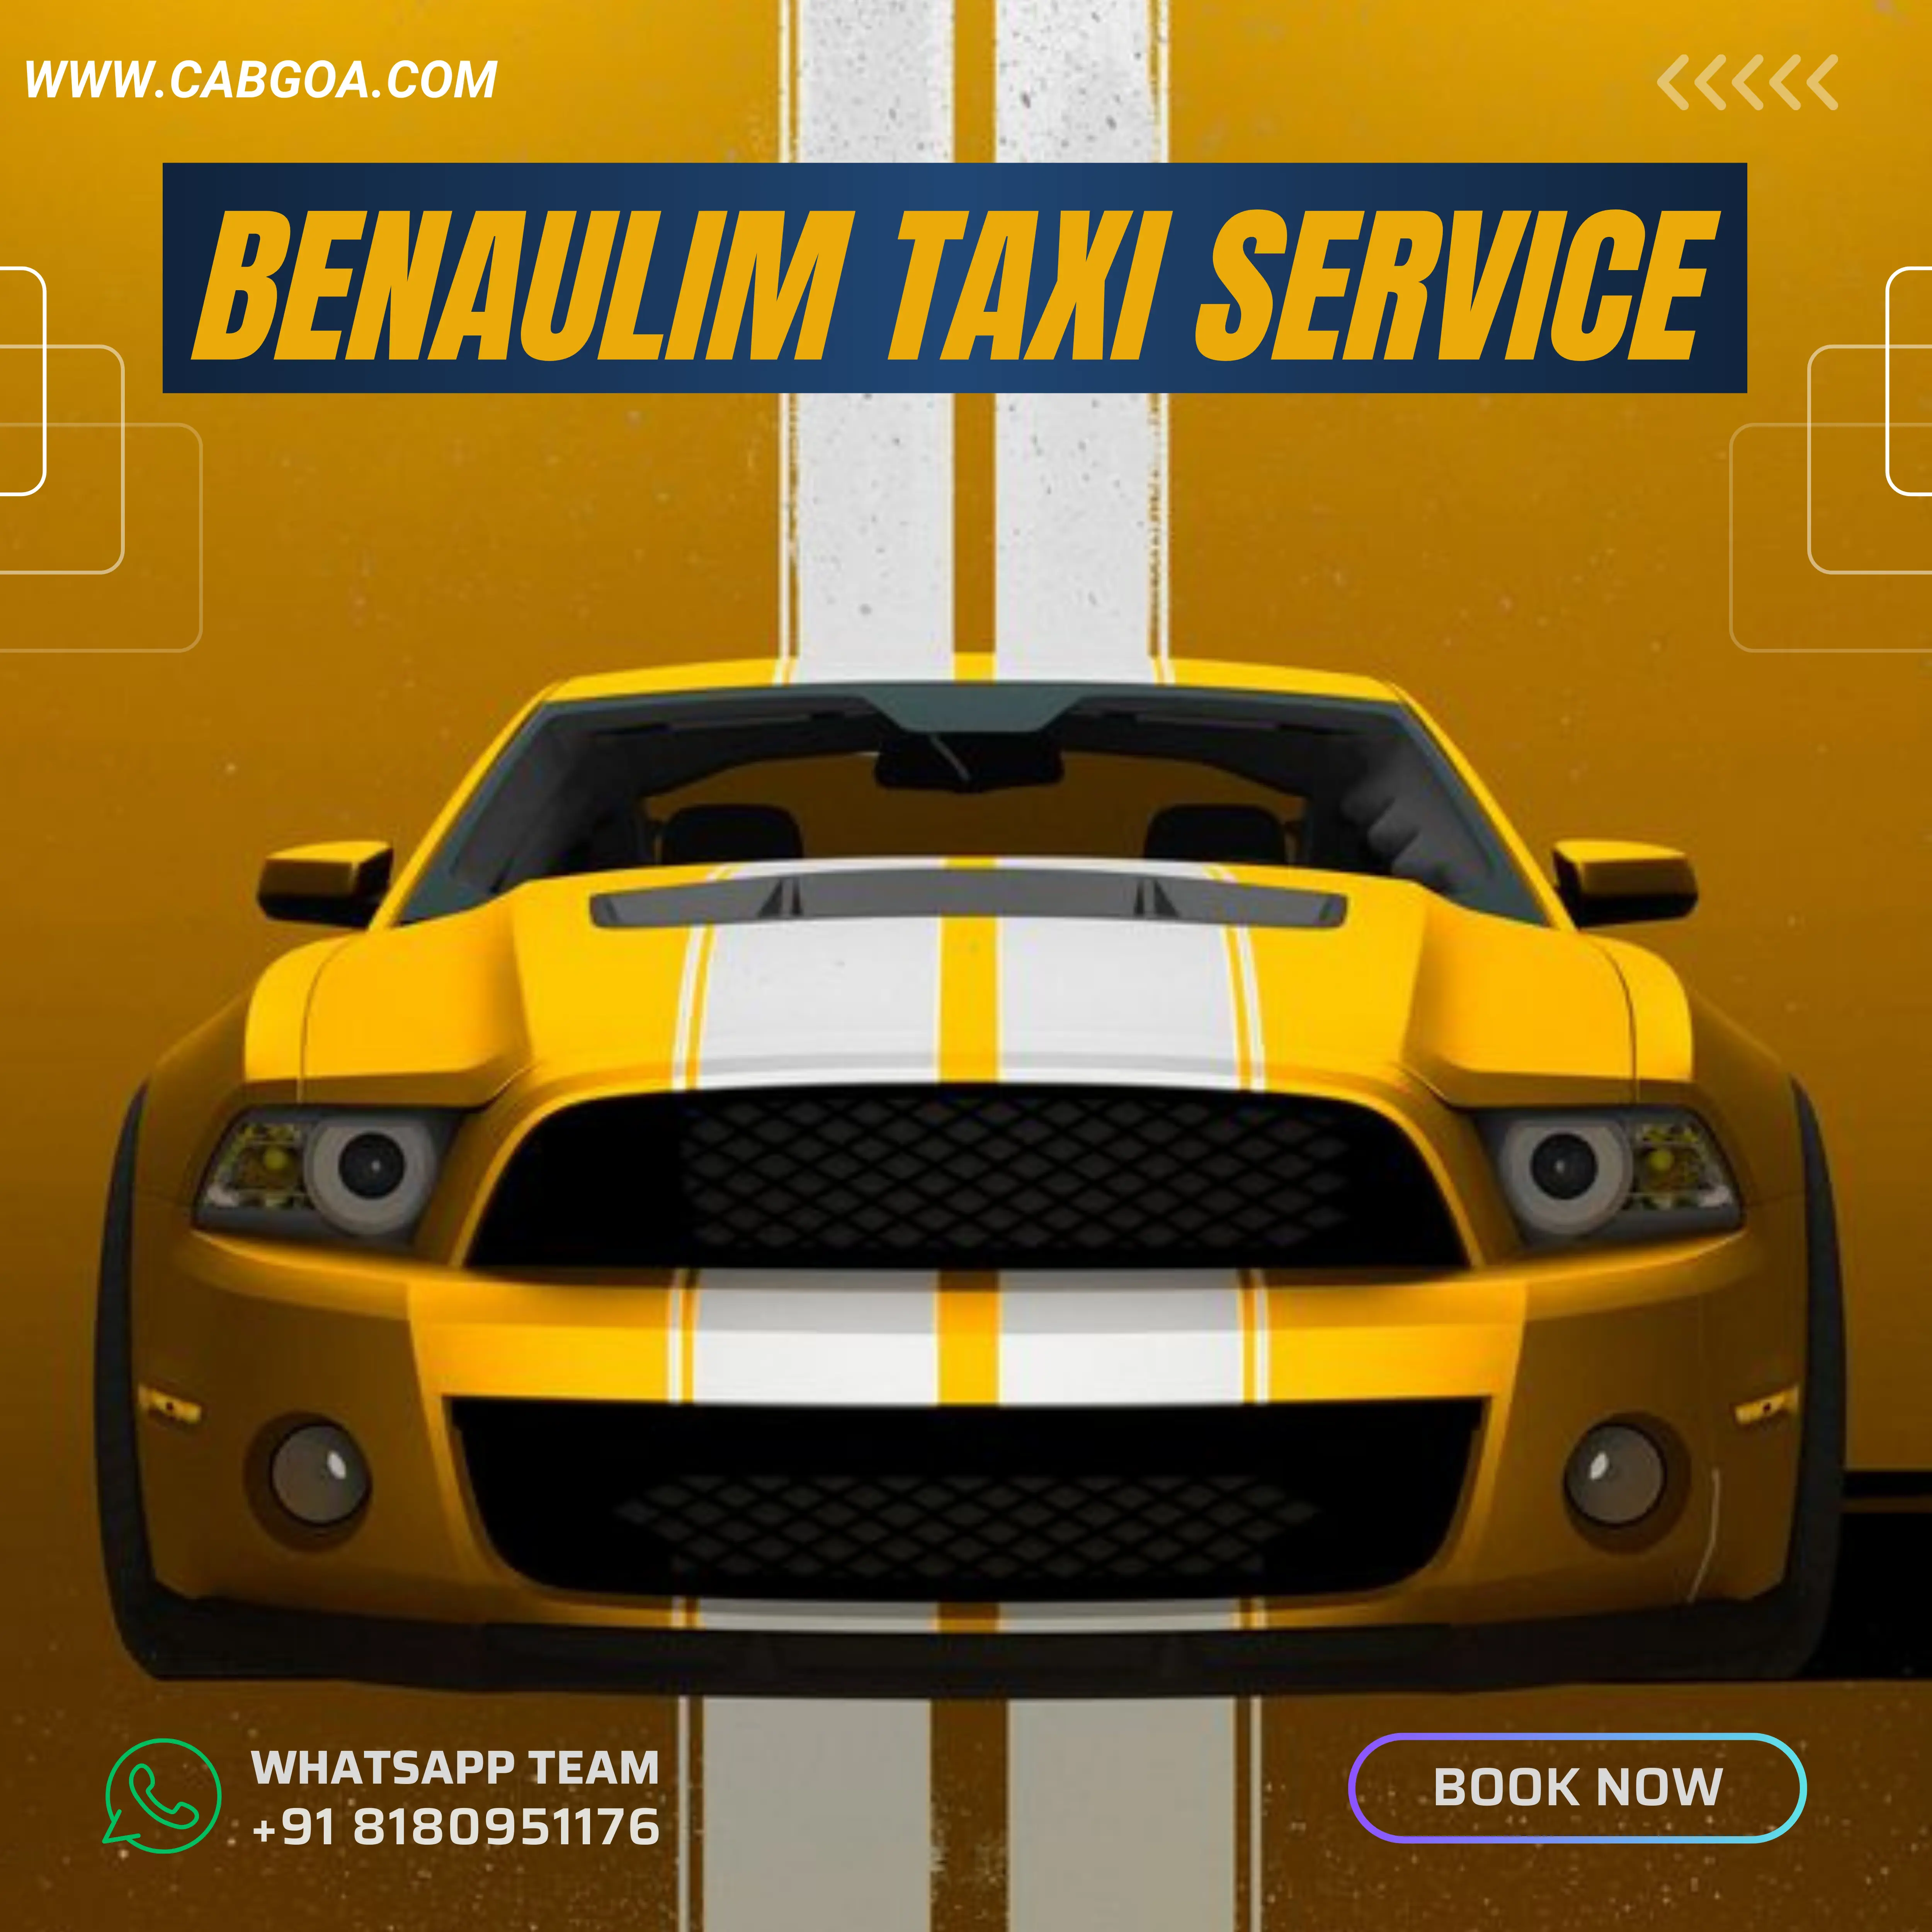 Benaulim Taxi Service